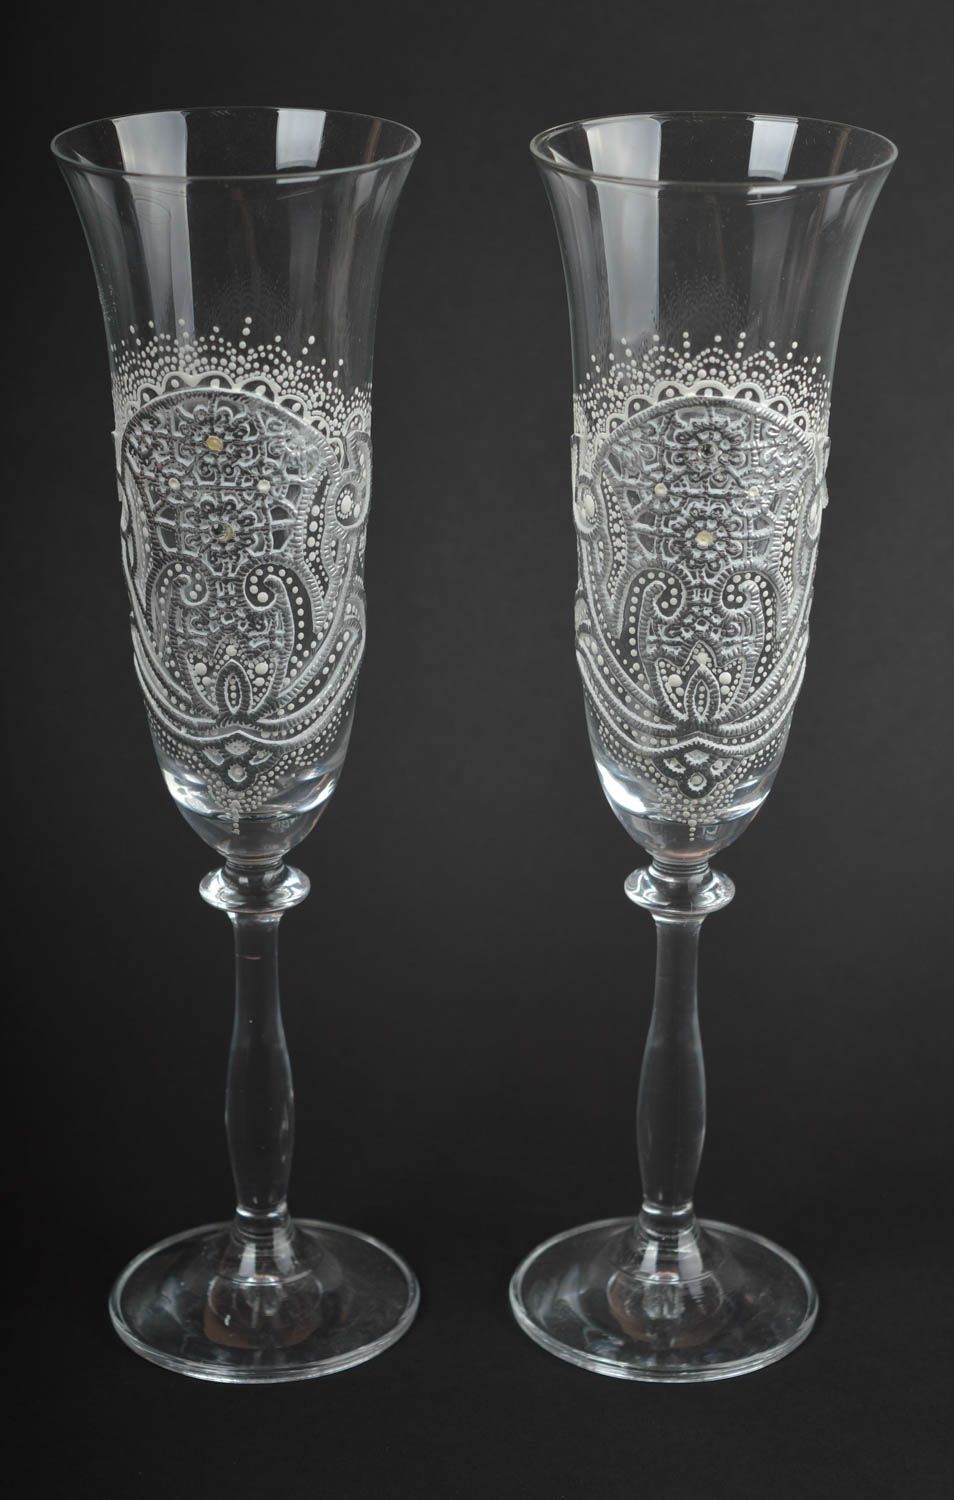 Handmade glasses for wedding glasses for newlyweds wedding attributes photo 2